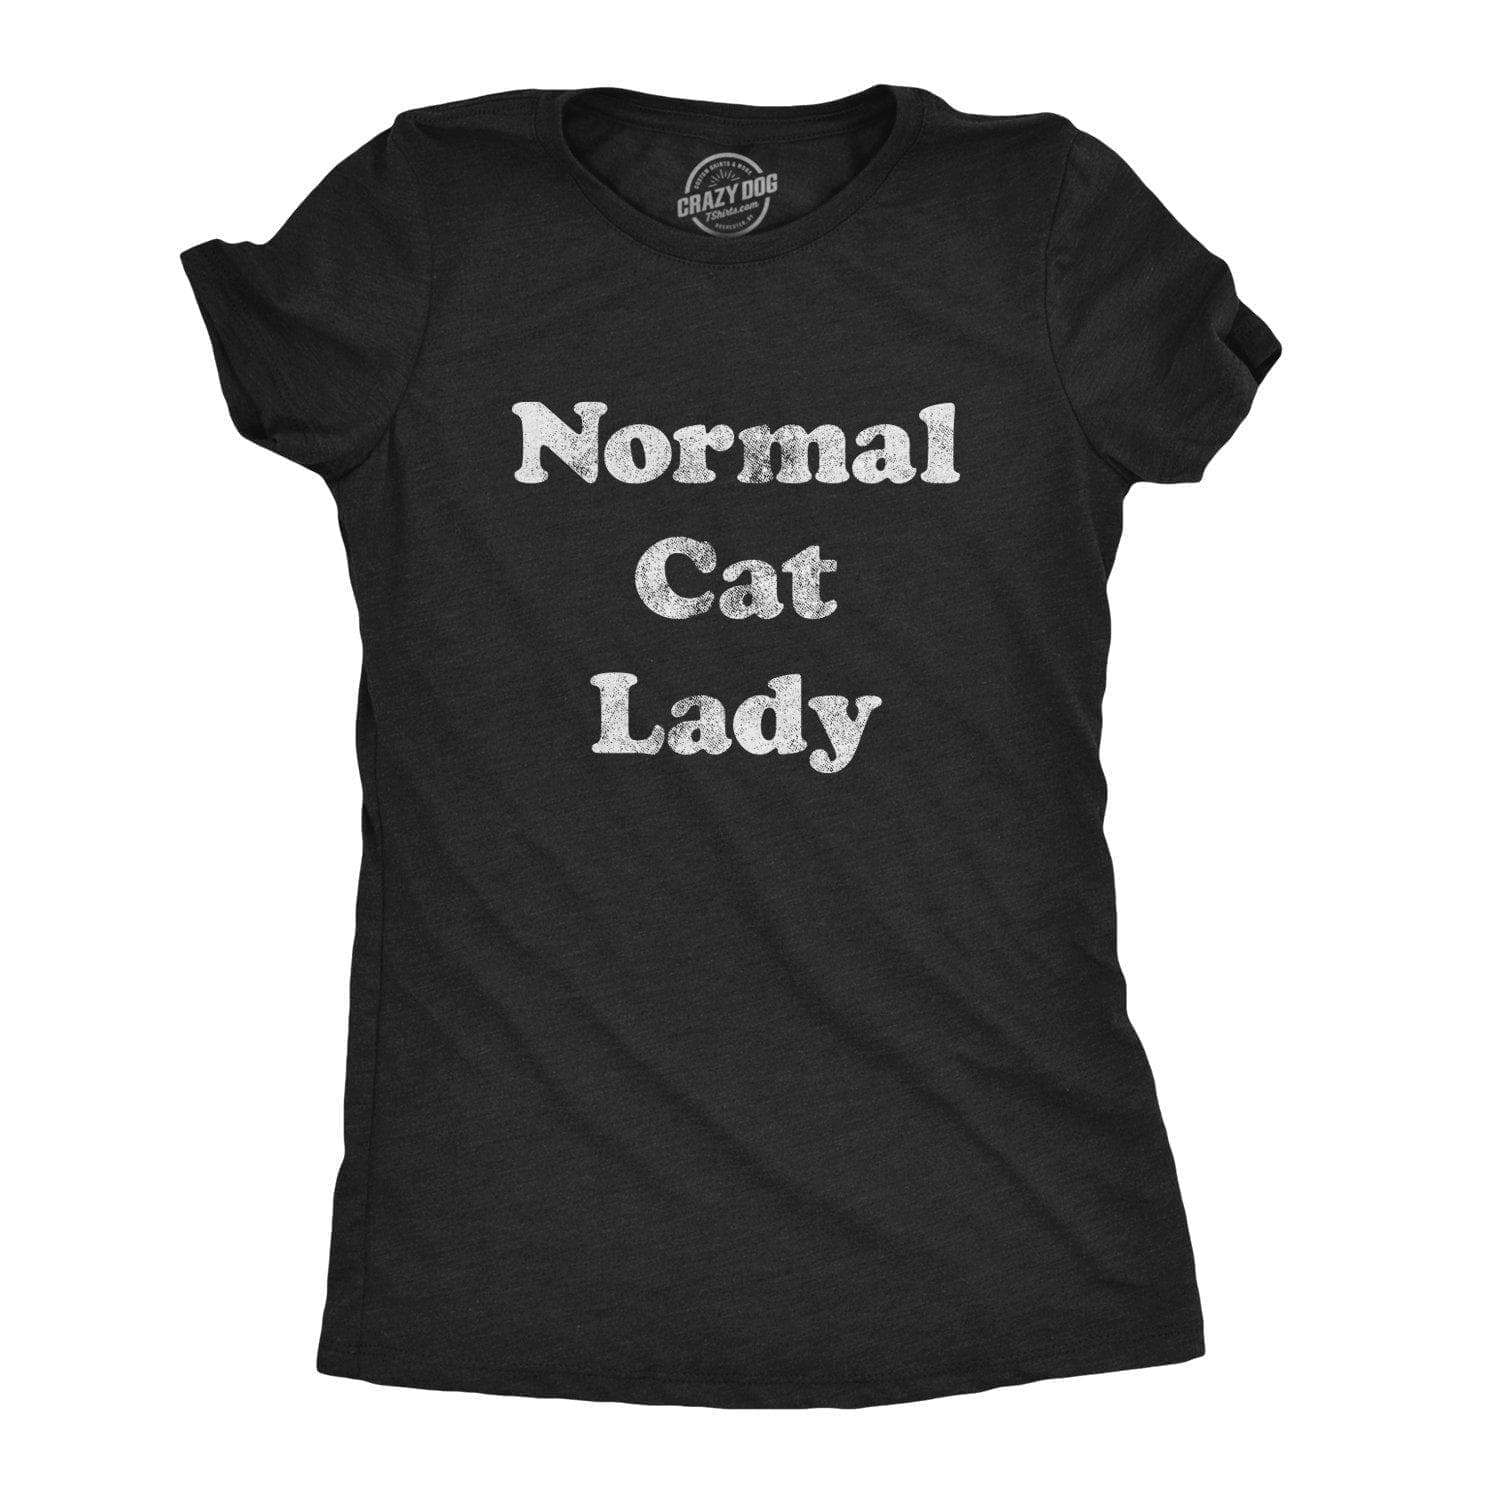 Normal Cat Lady Women's Tshirt - Crazy Dog T-Shirts